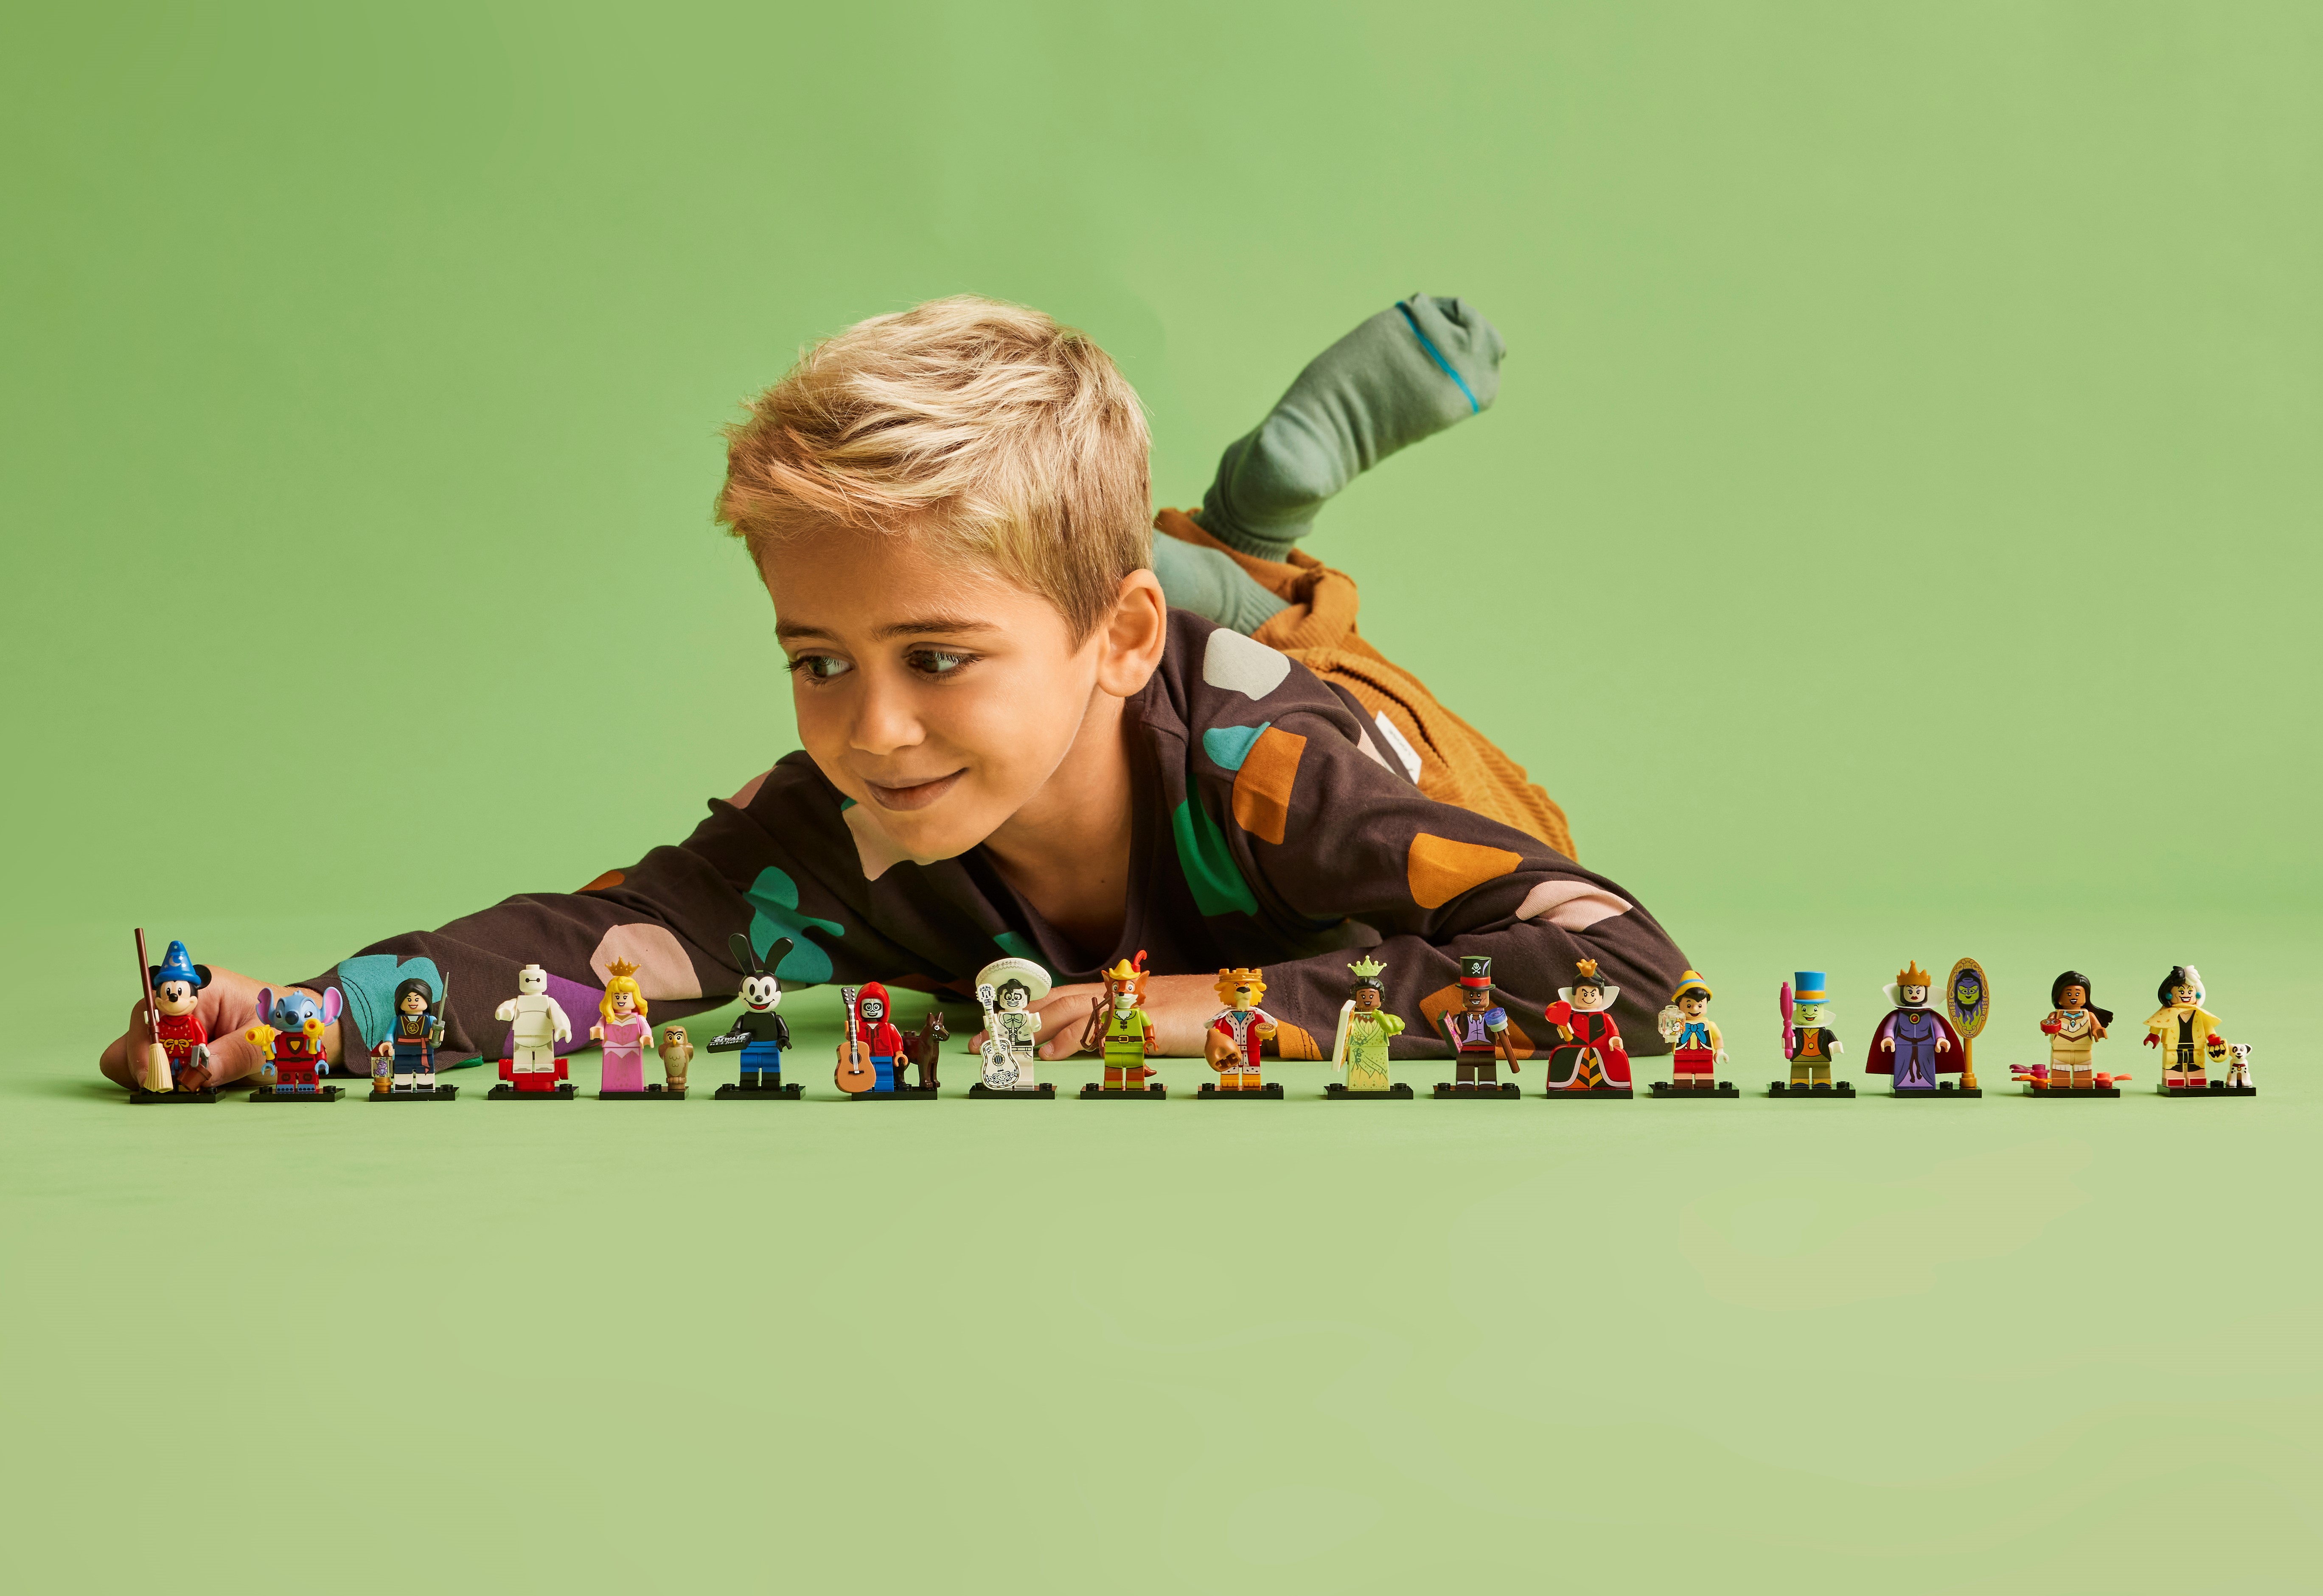 New Lego Minifigures 71038 Disney 100 Series Stitch figure Disney Series 3